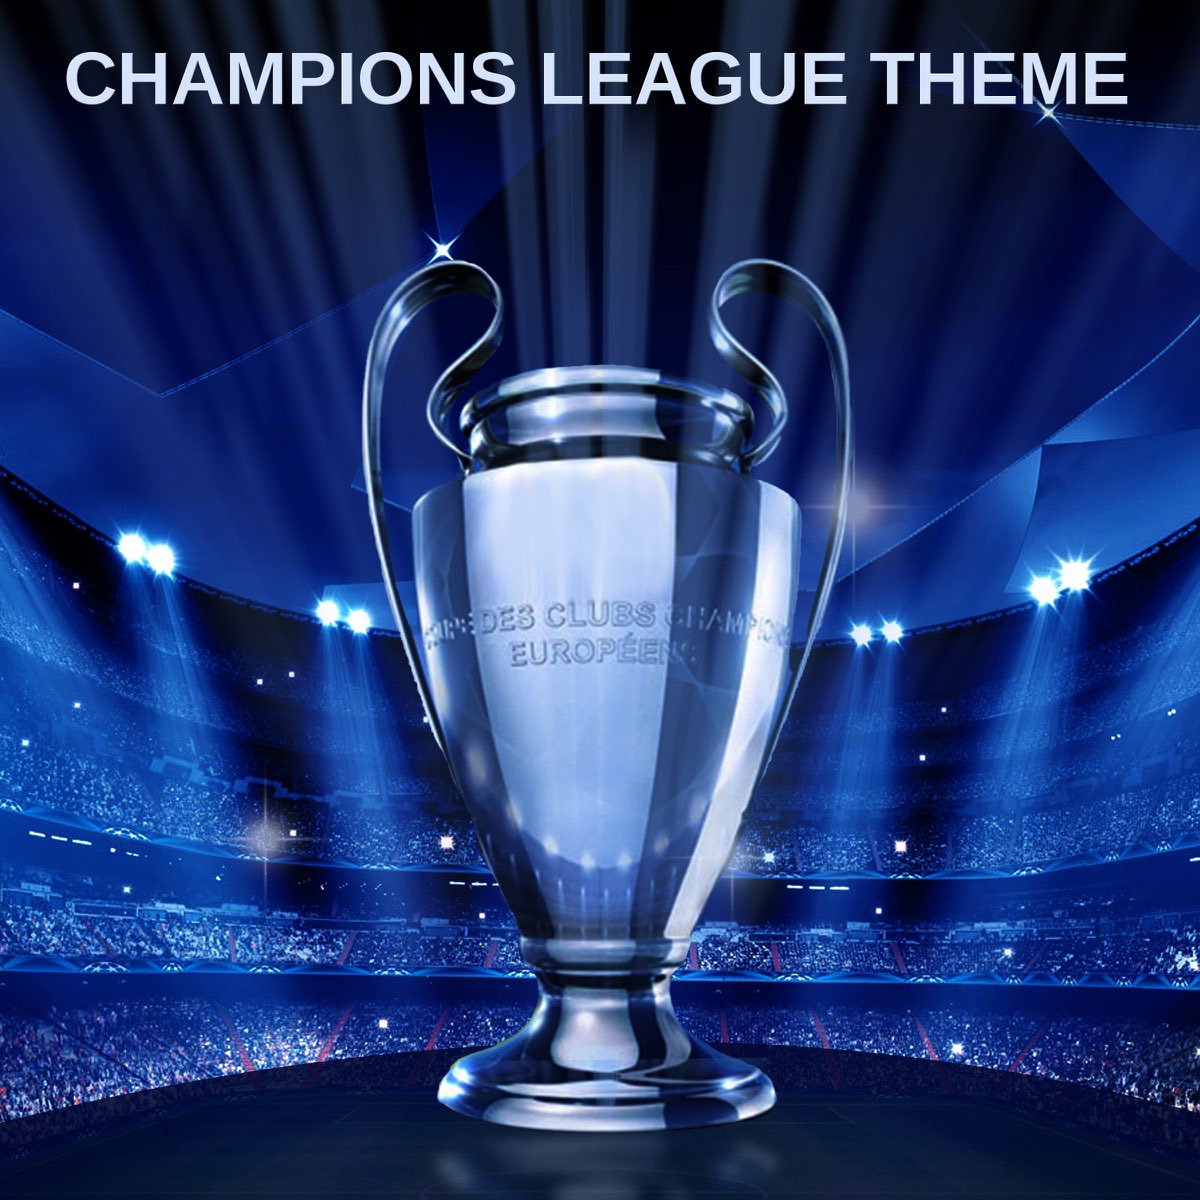 Champions League Theme - Album by Champions League Orchestra - Apple Music